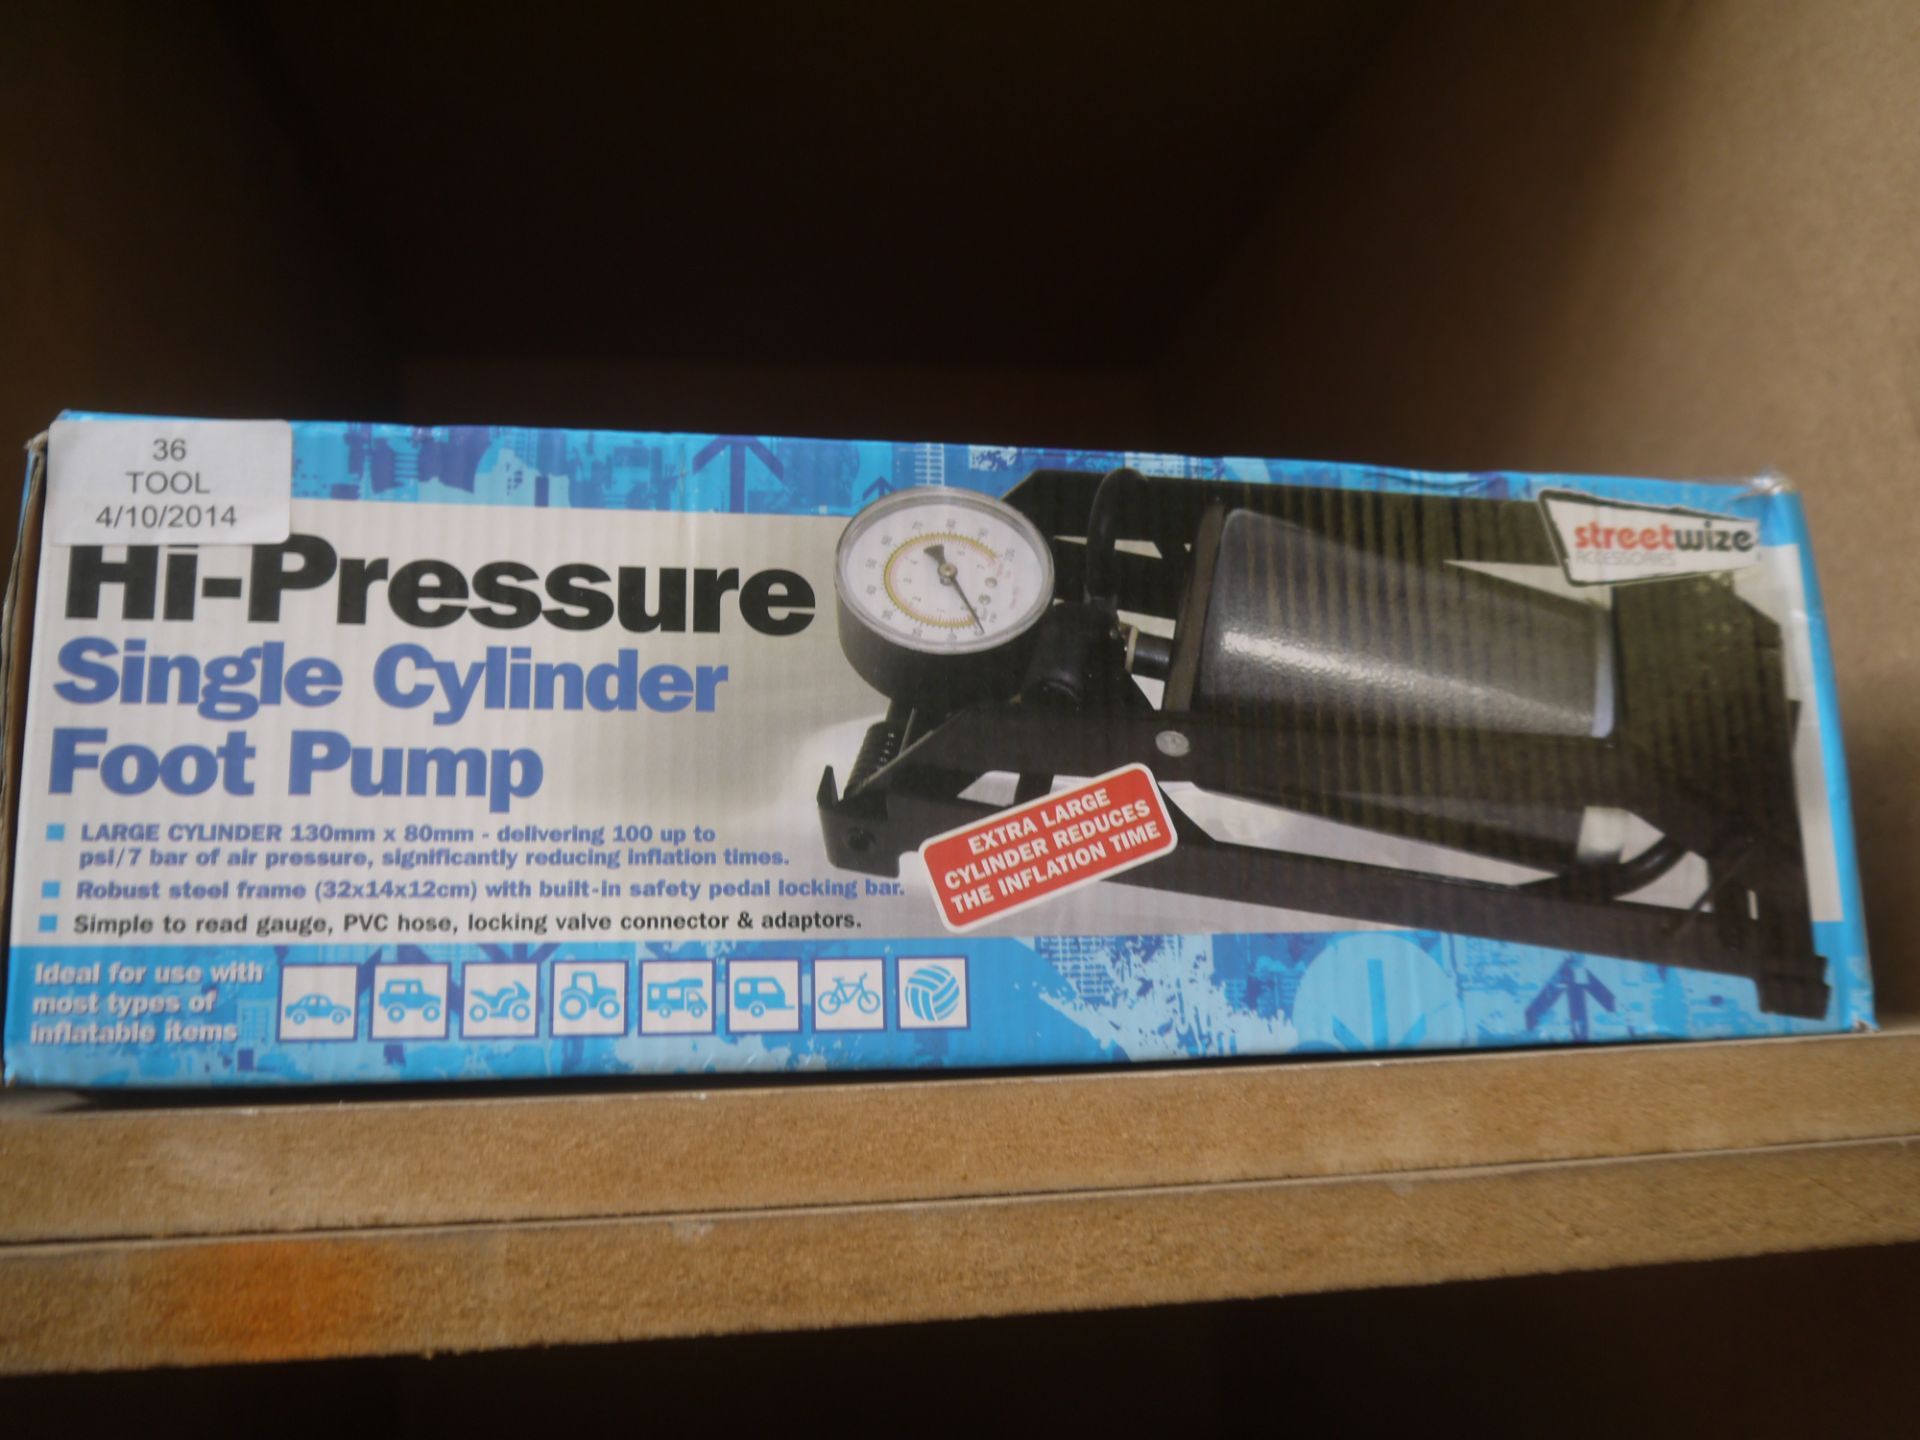 StreetWize Hi-Pressure Single Cylinder Foot Pump. Boxed.